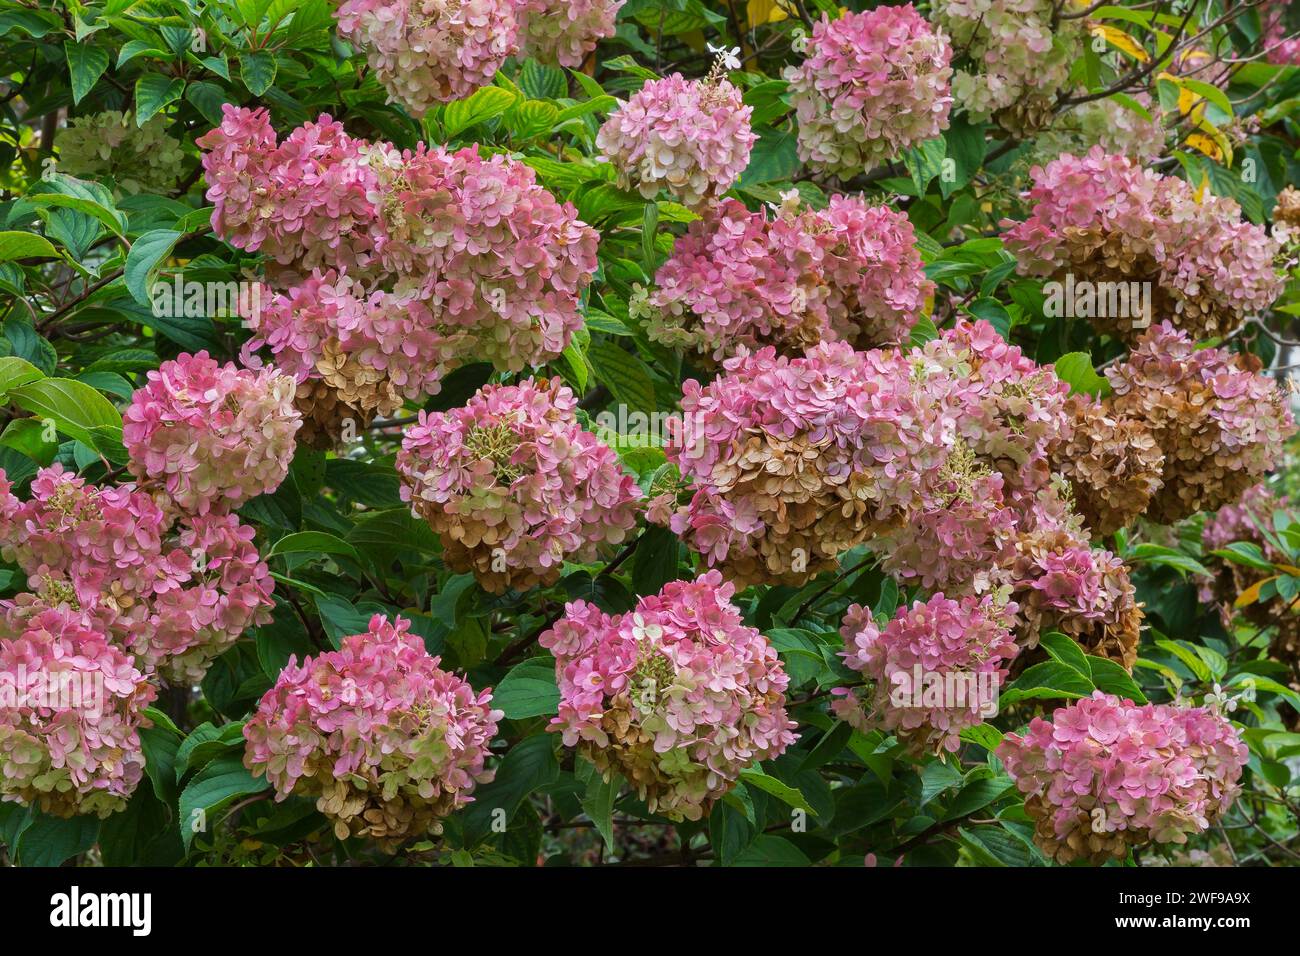 Hortensie paniculata 'Grandiflora' - PeeGee Hortensie im Herbst. Stockfoto